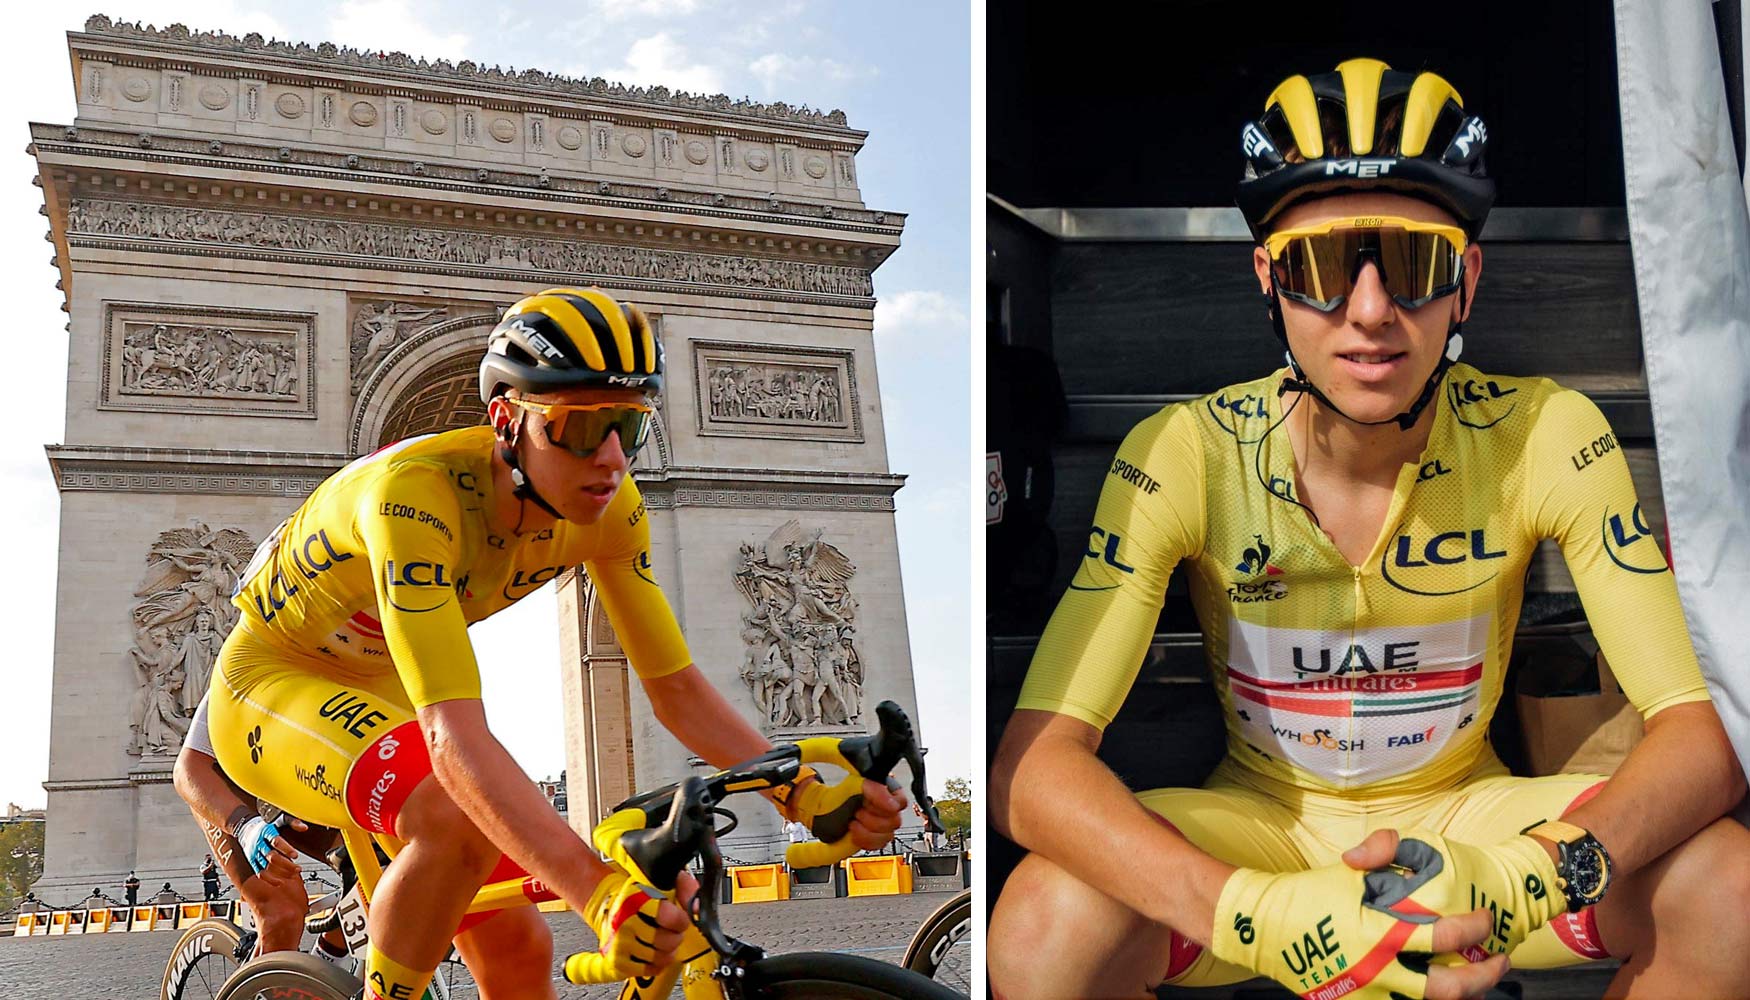 Sciocon-Blue-Zero-glasses-off-the-bike_reduce-screen-time-fatigue_Tadej-Pogacar-2020-Tour-de-France-winner.jpg